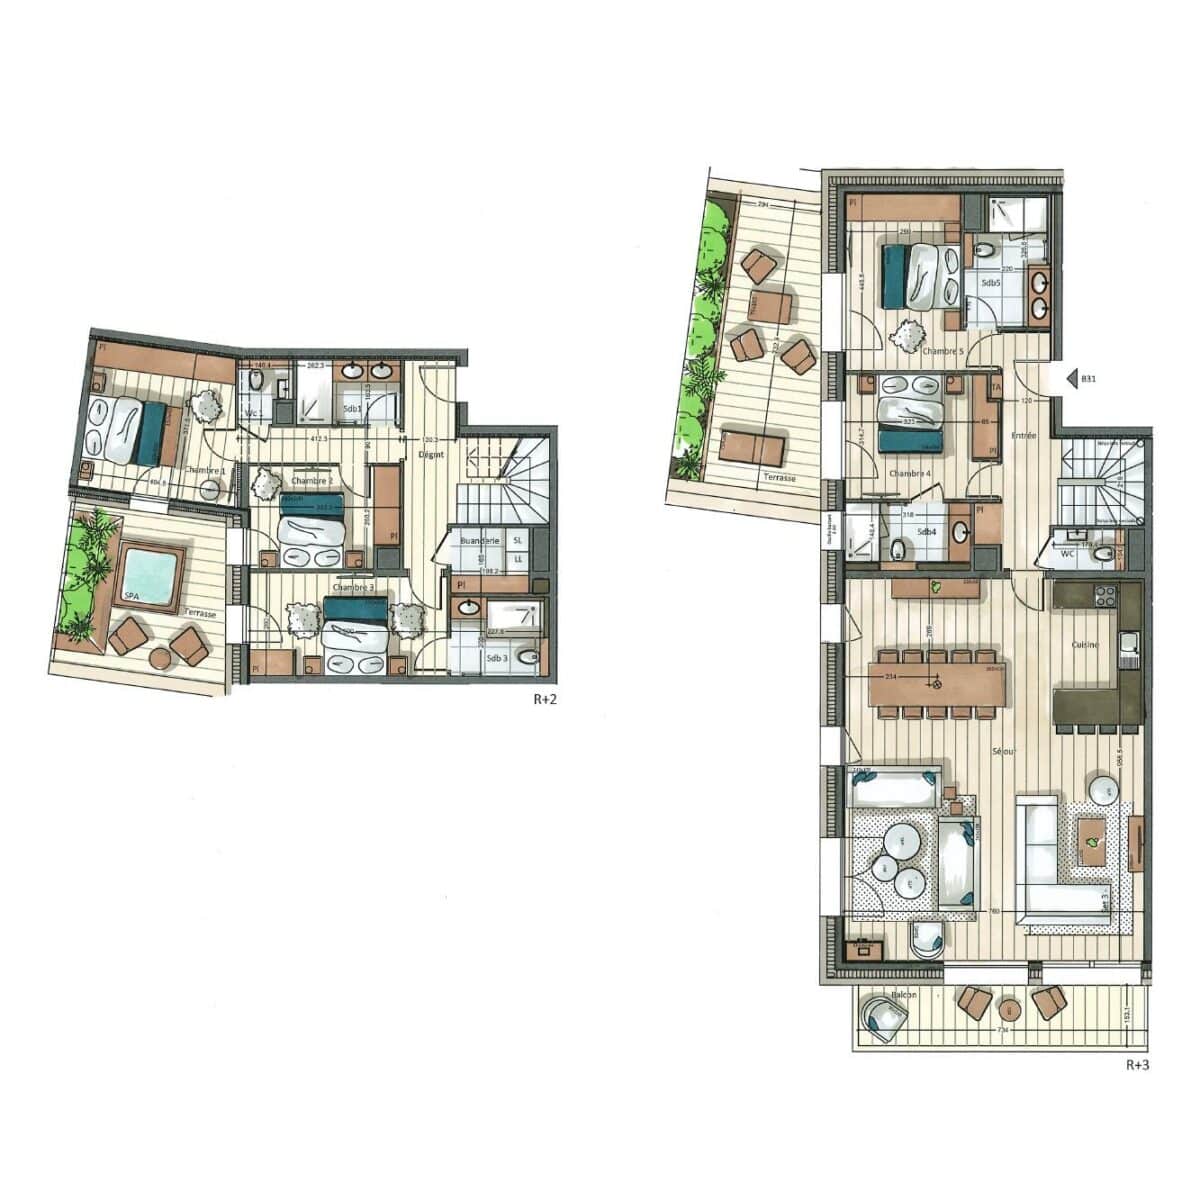 Vail Lodge B31 Floor Plan